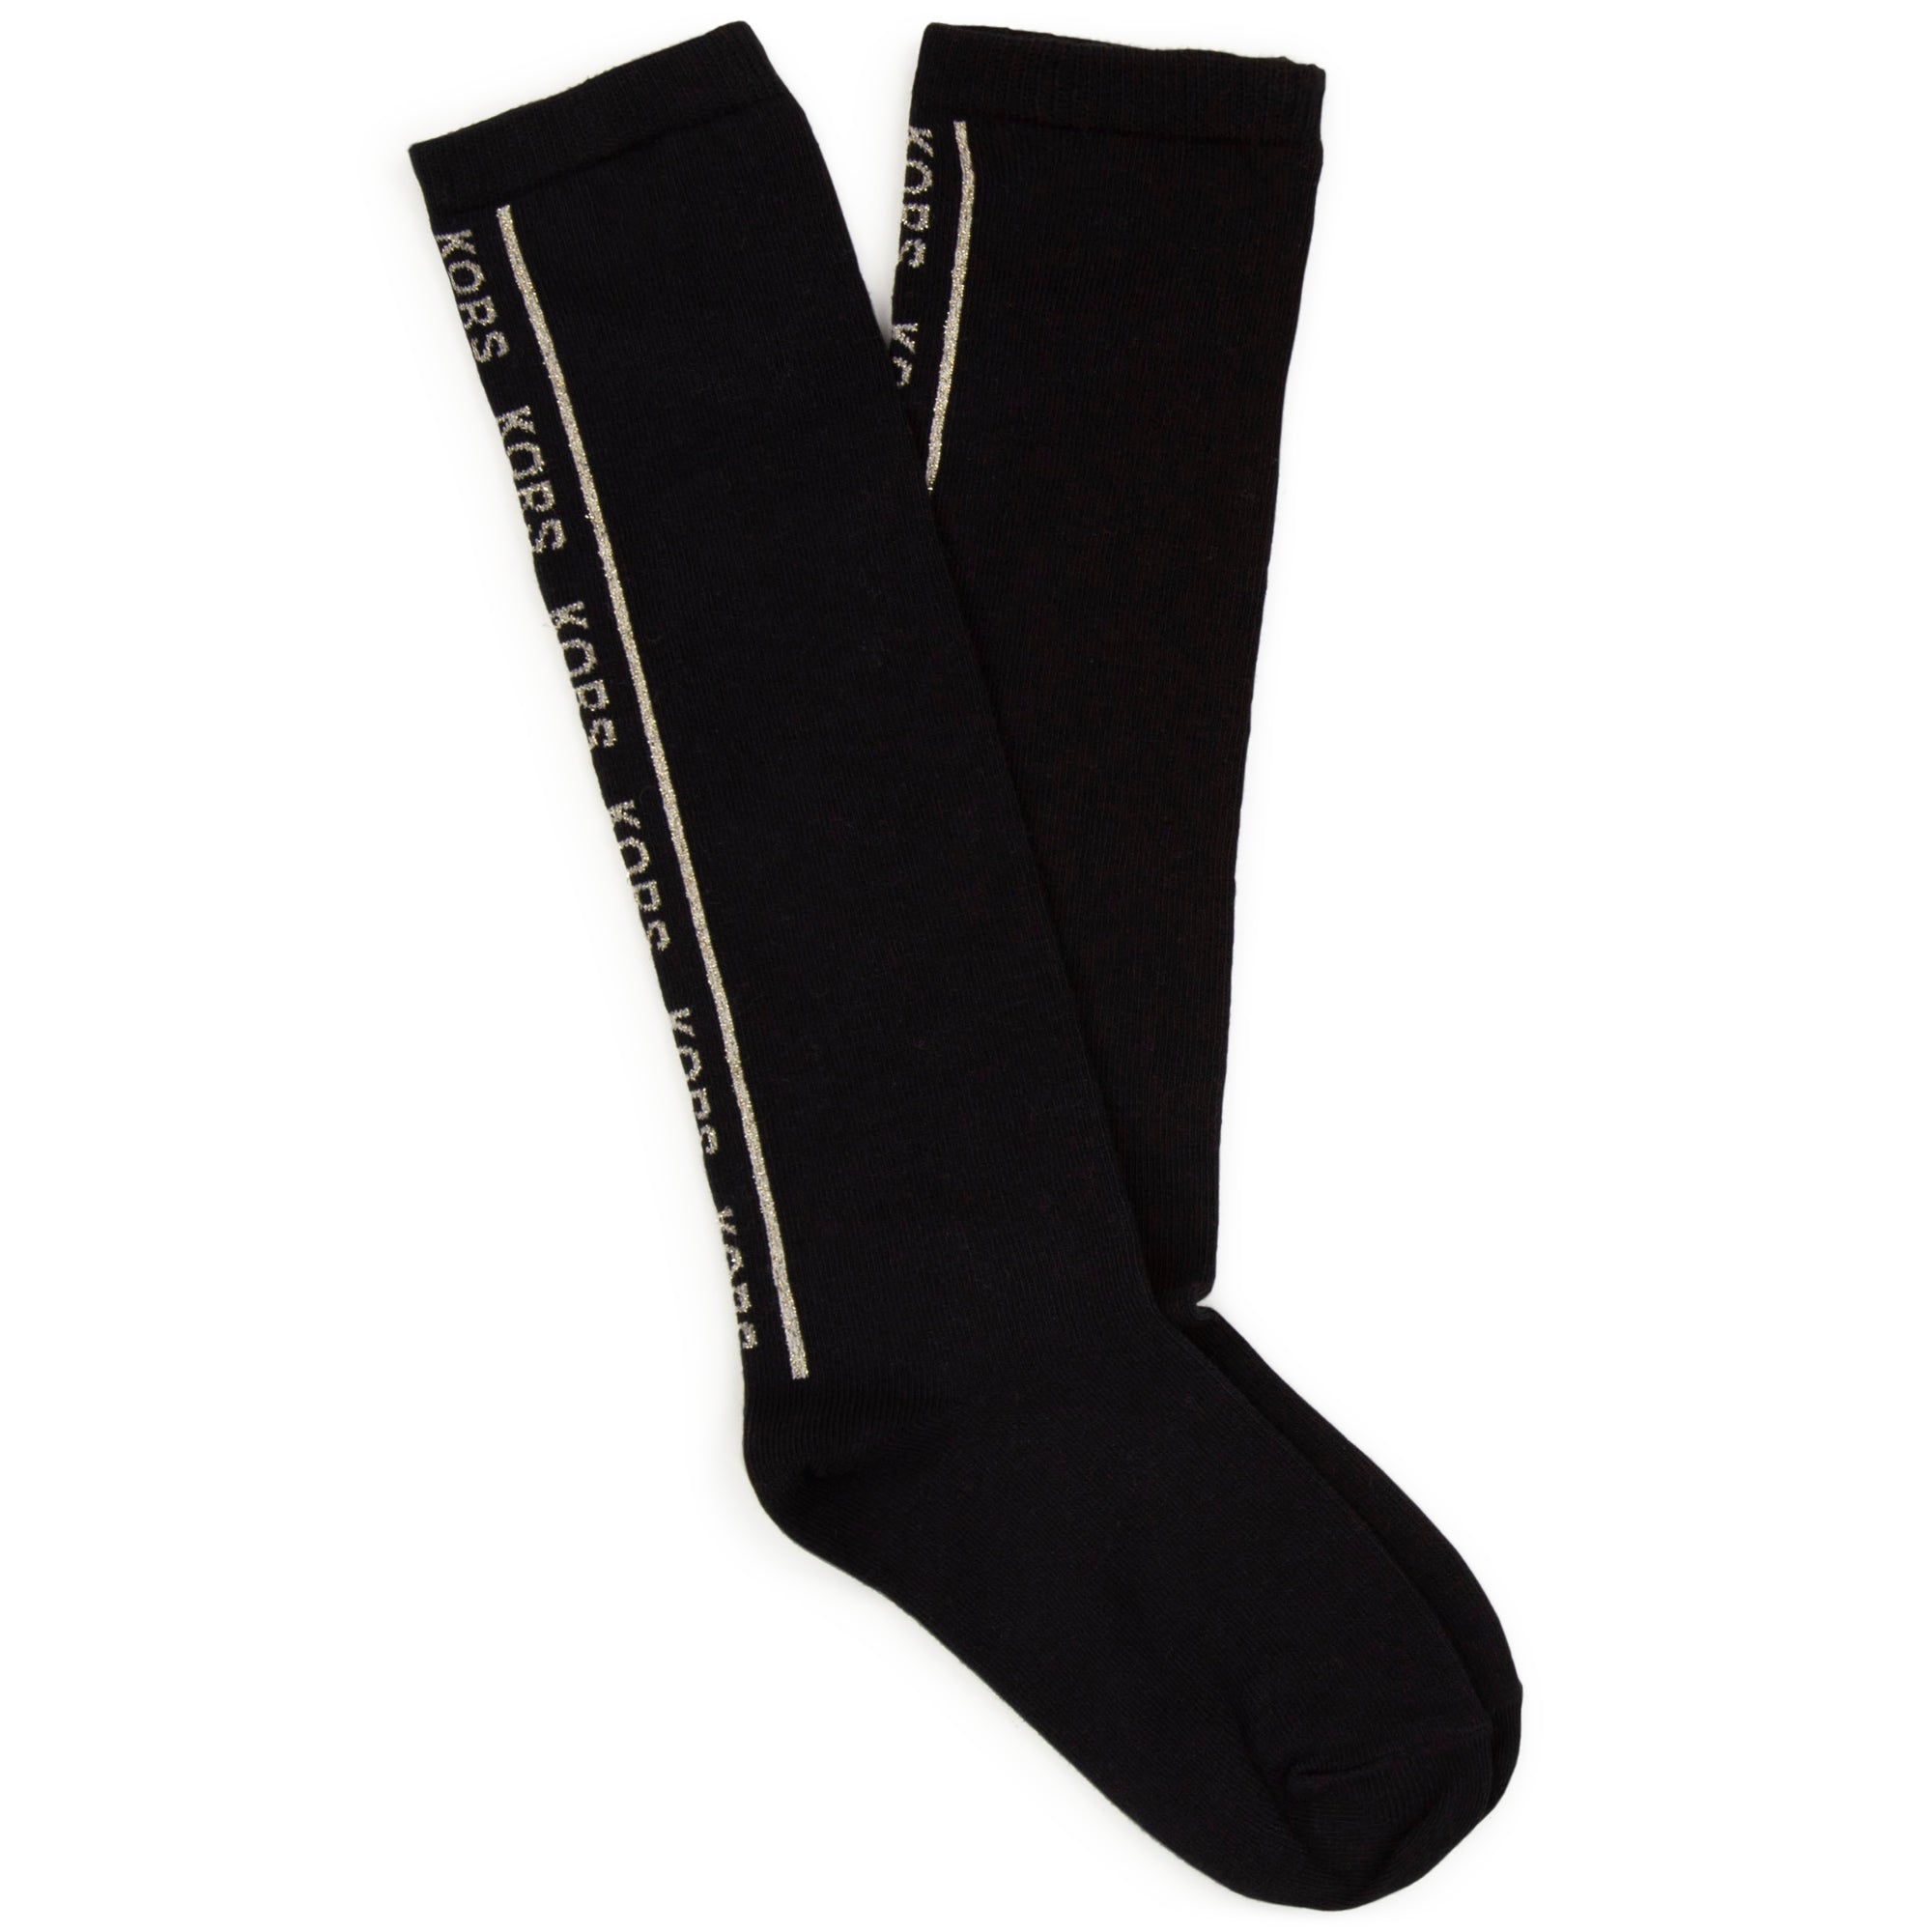 Michael Kors Black Socks